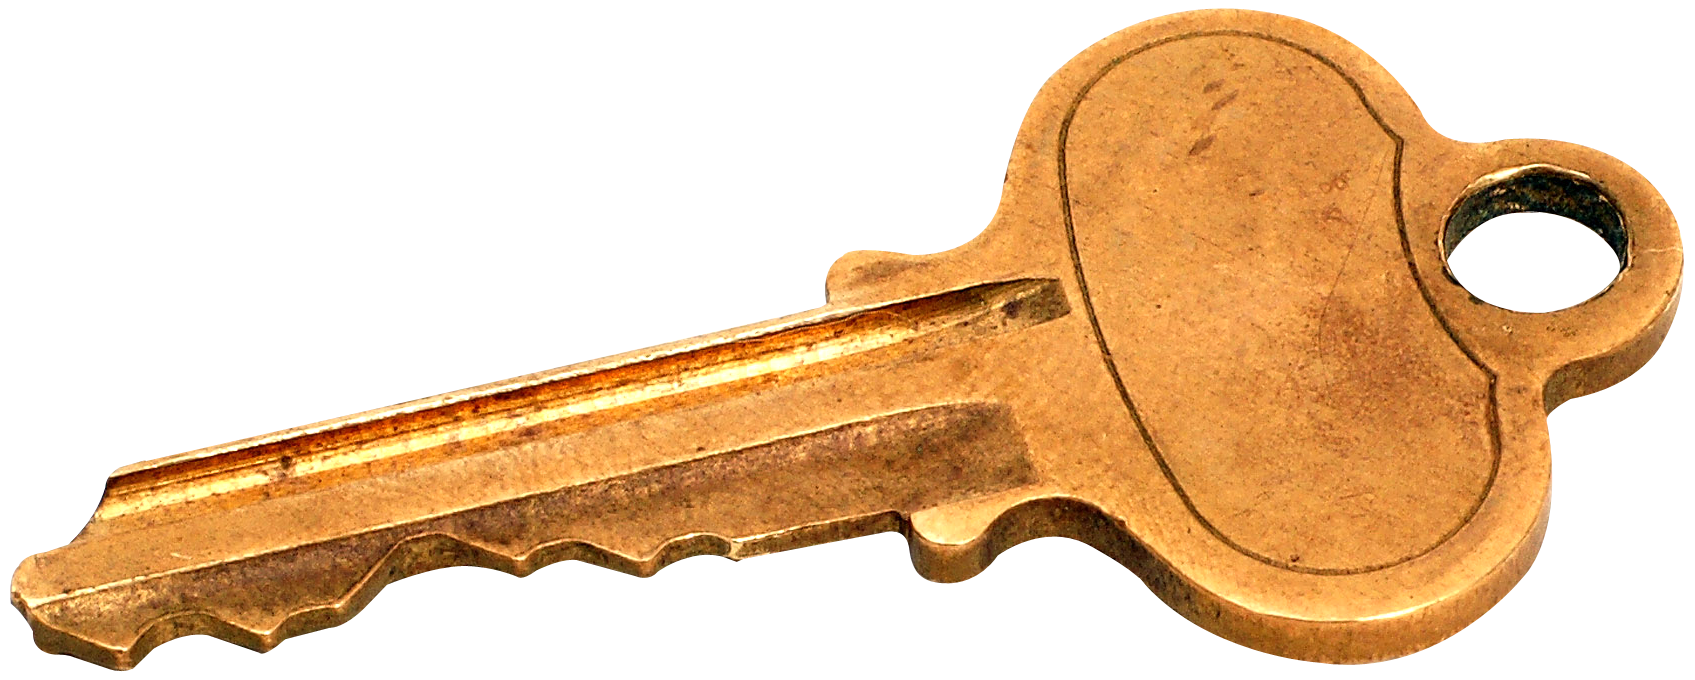 Key PNG Transparent Image